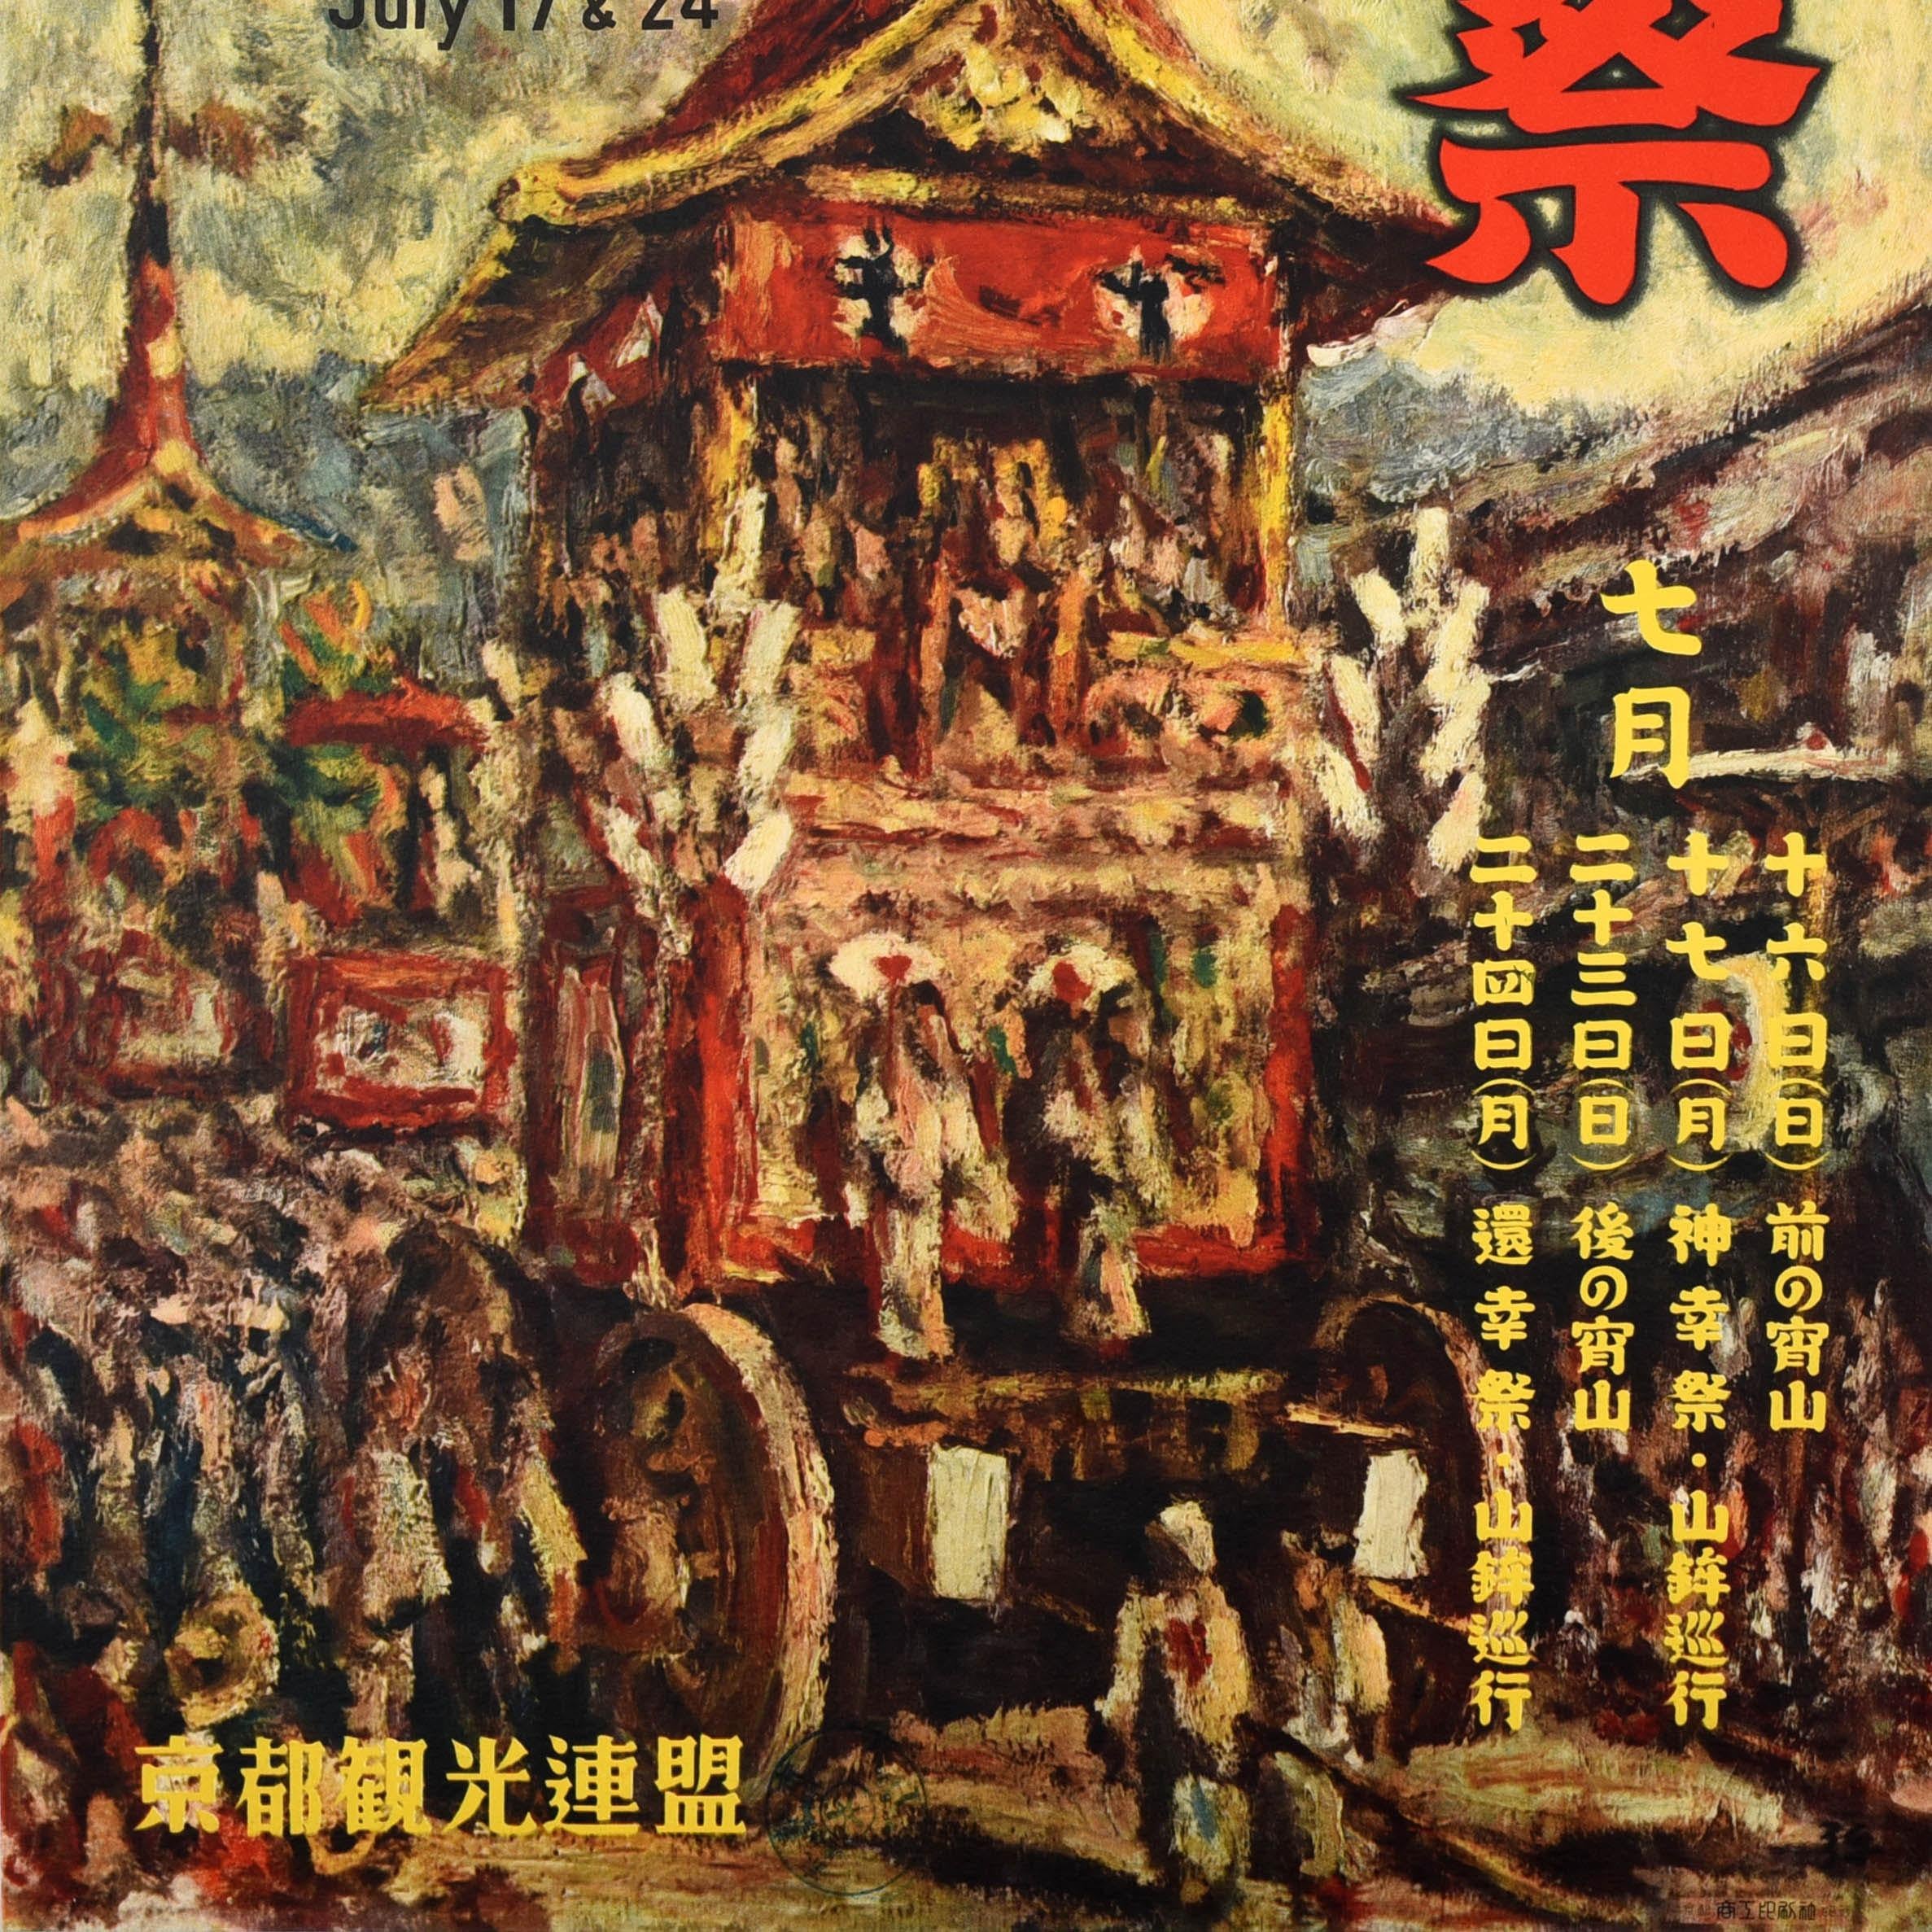 Japanese Original Vintage Asia Travel Poster Gion Festival Kyoto Float Procession Japan For Sale